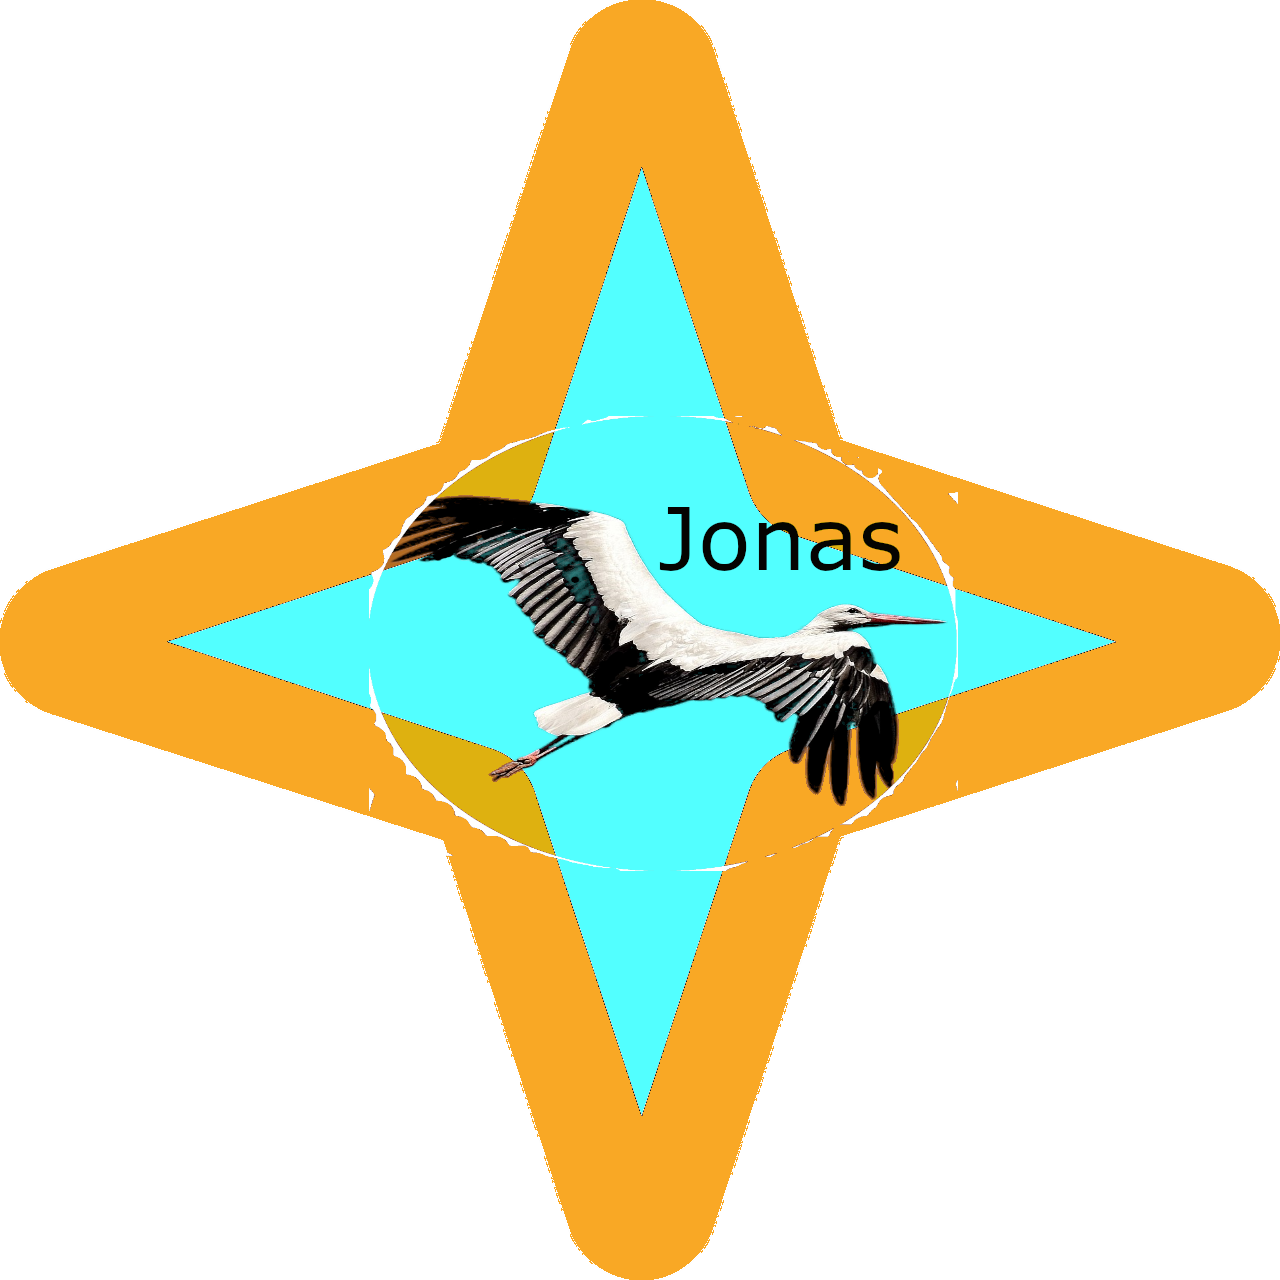 HL 457 Jonas